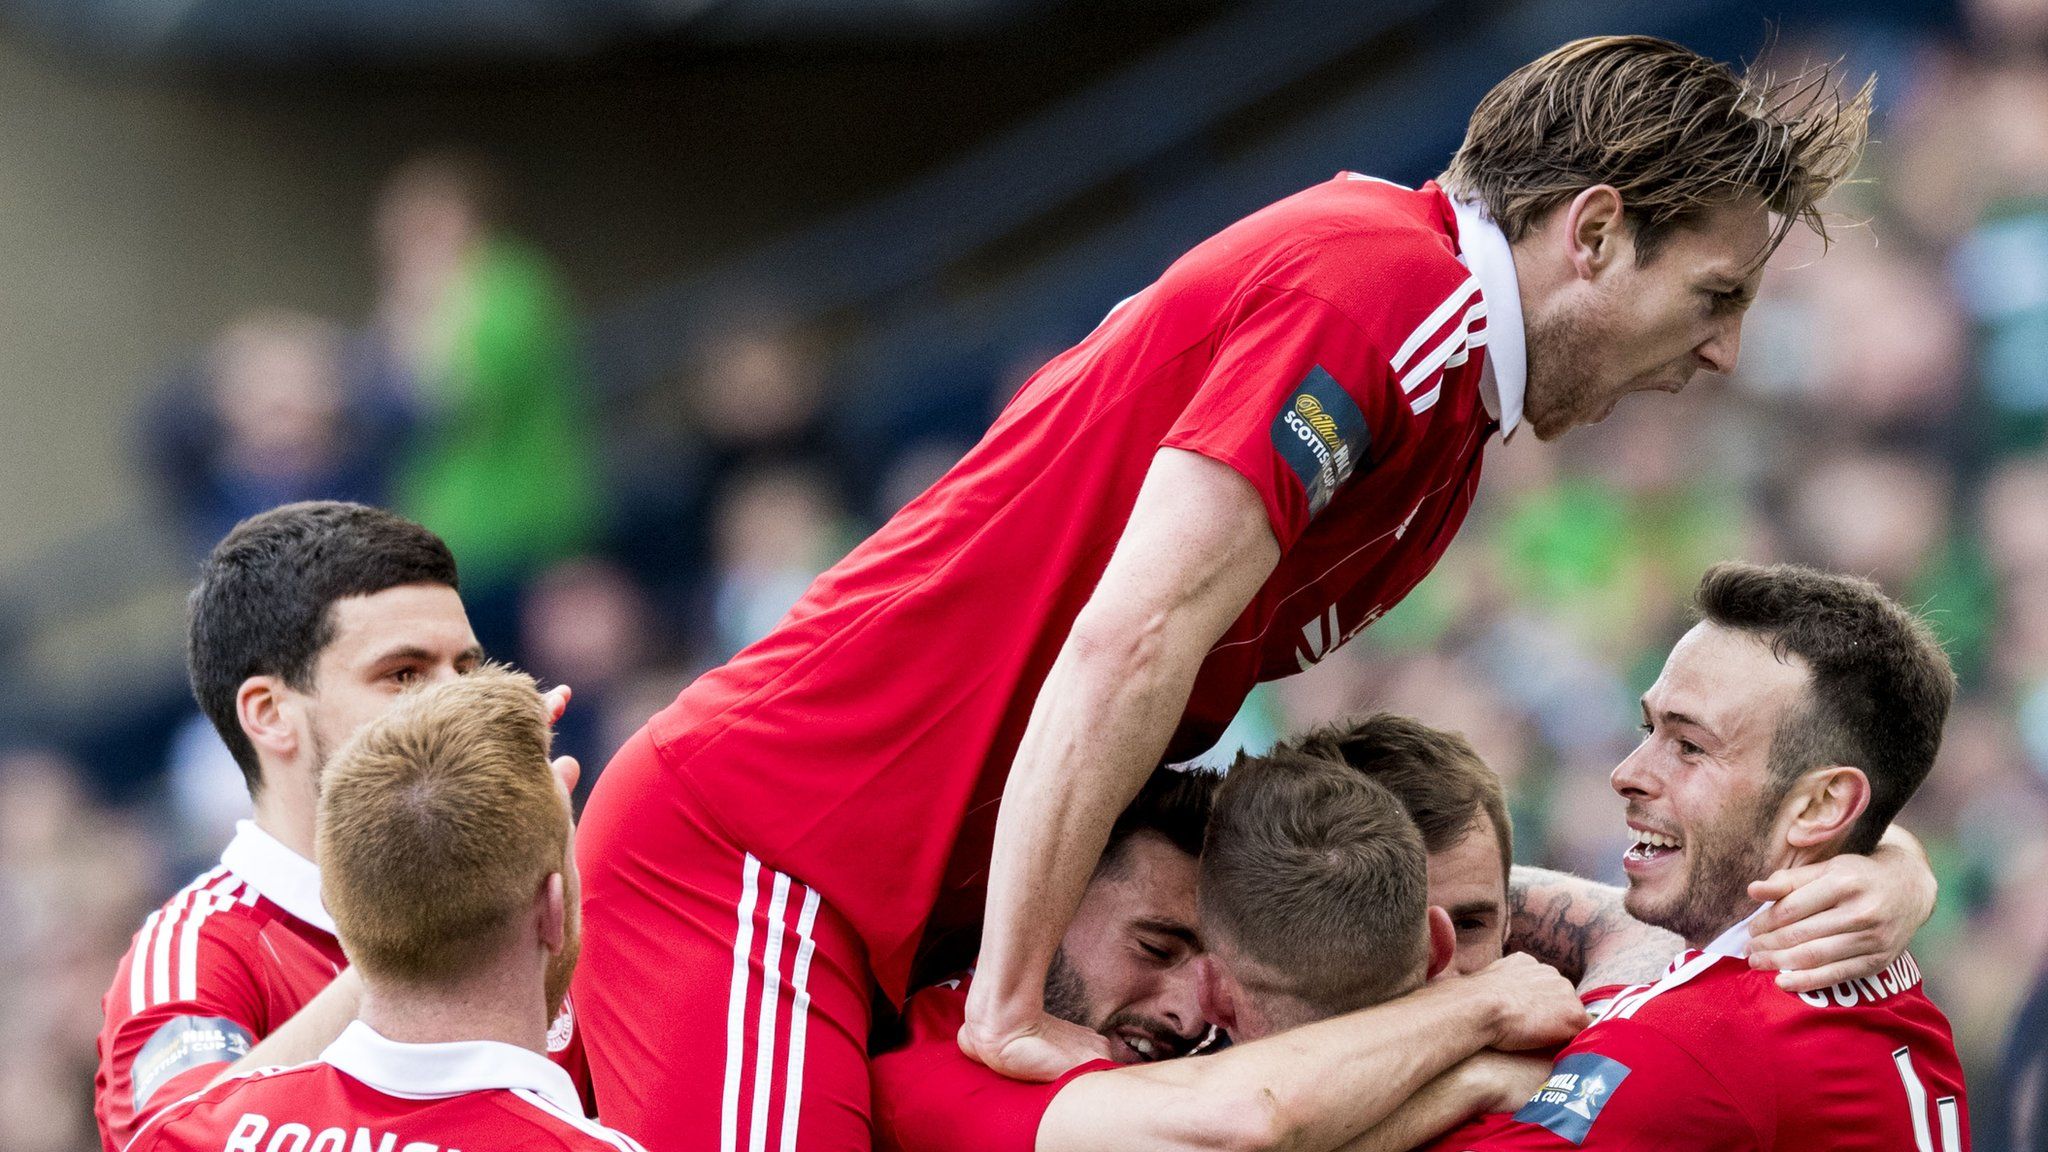 Aberdeen players celebrate a goal